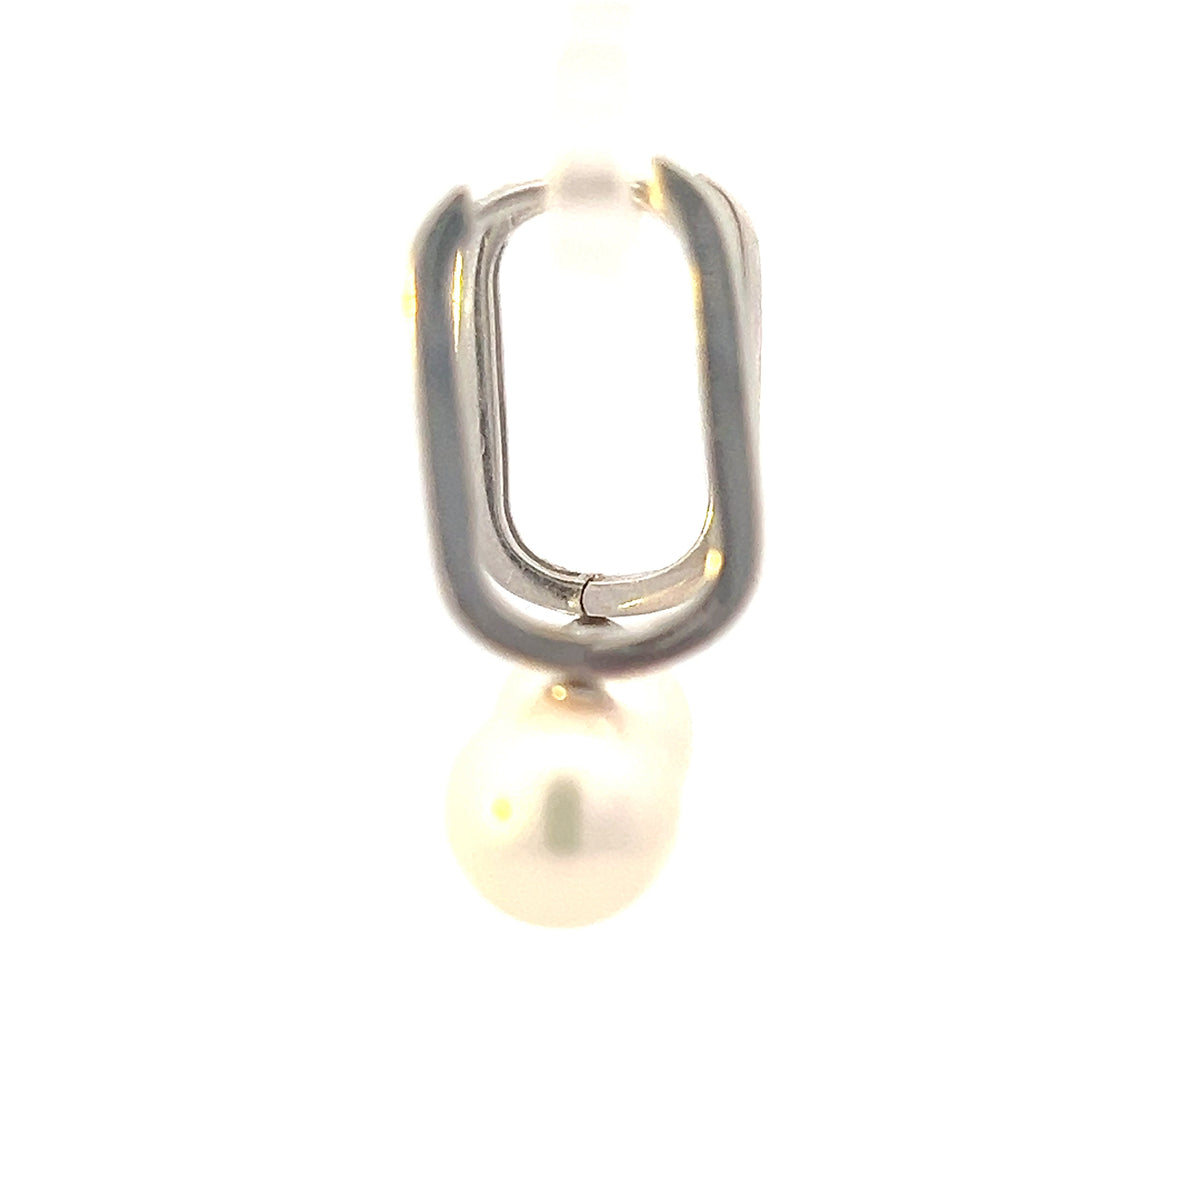 10K White Gold Cultured Pearl Drop / Dangle Huggie Earrings